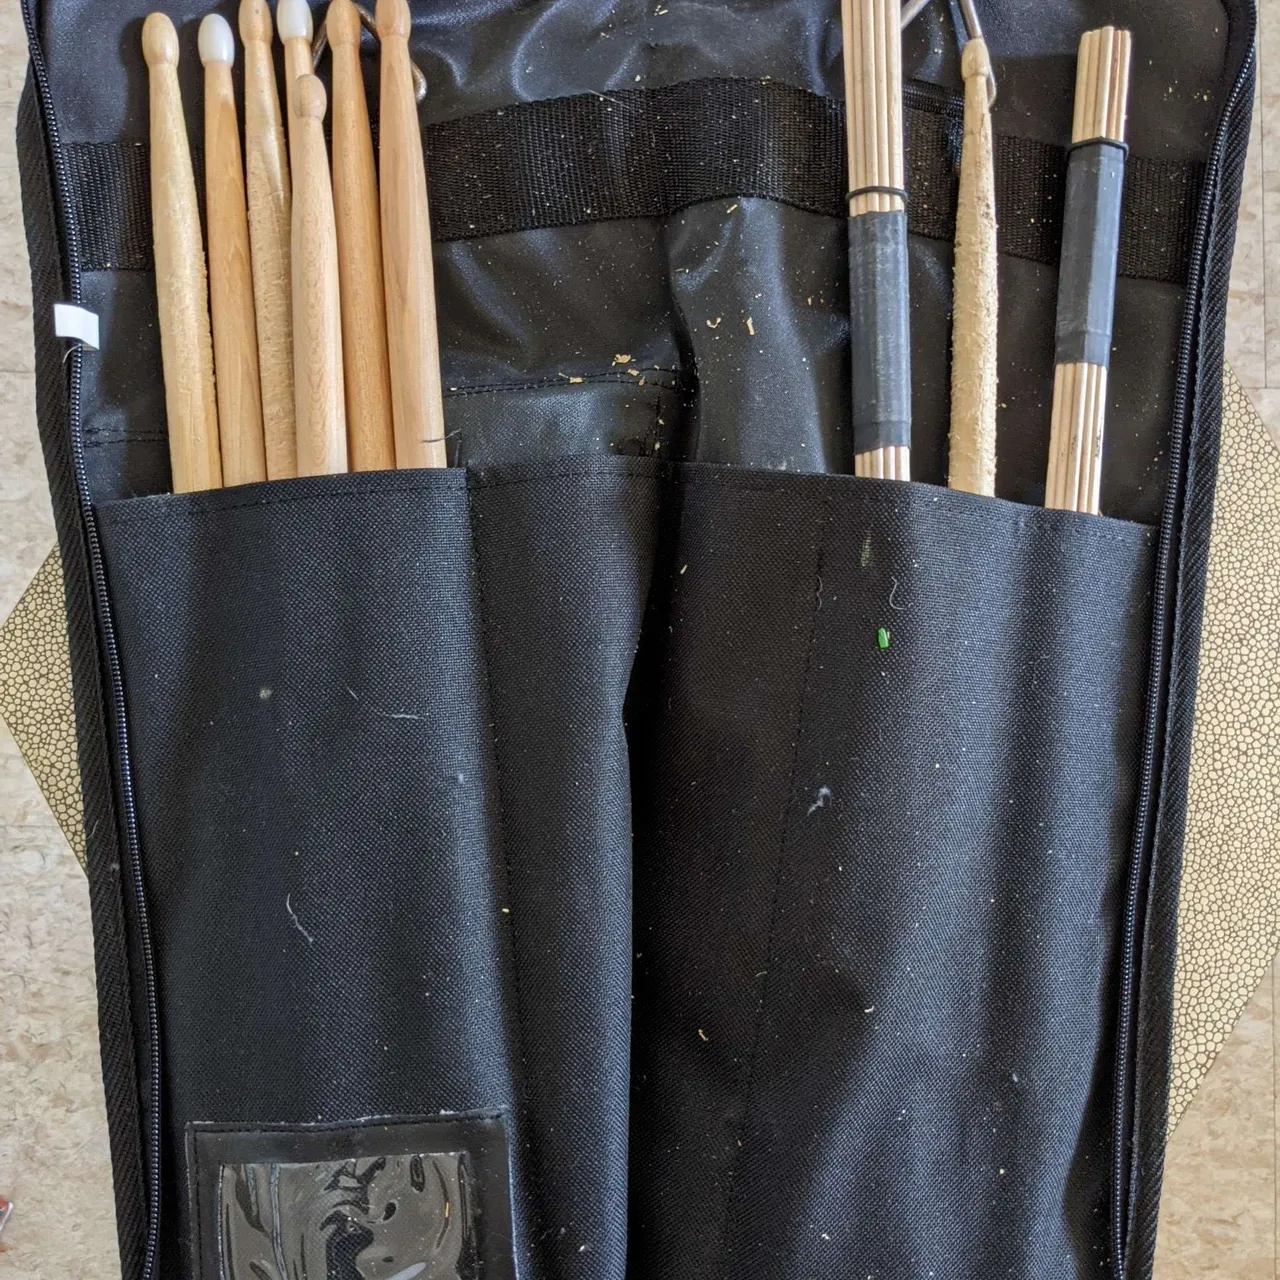 drum stick bag with various sticks photo 1